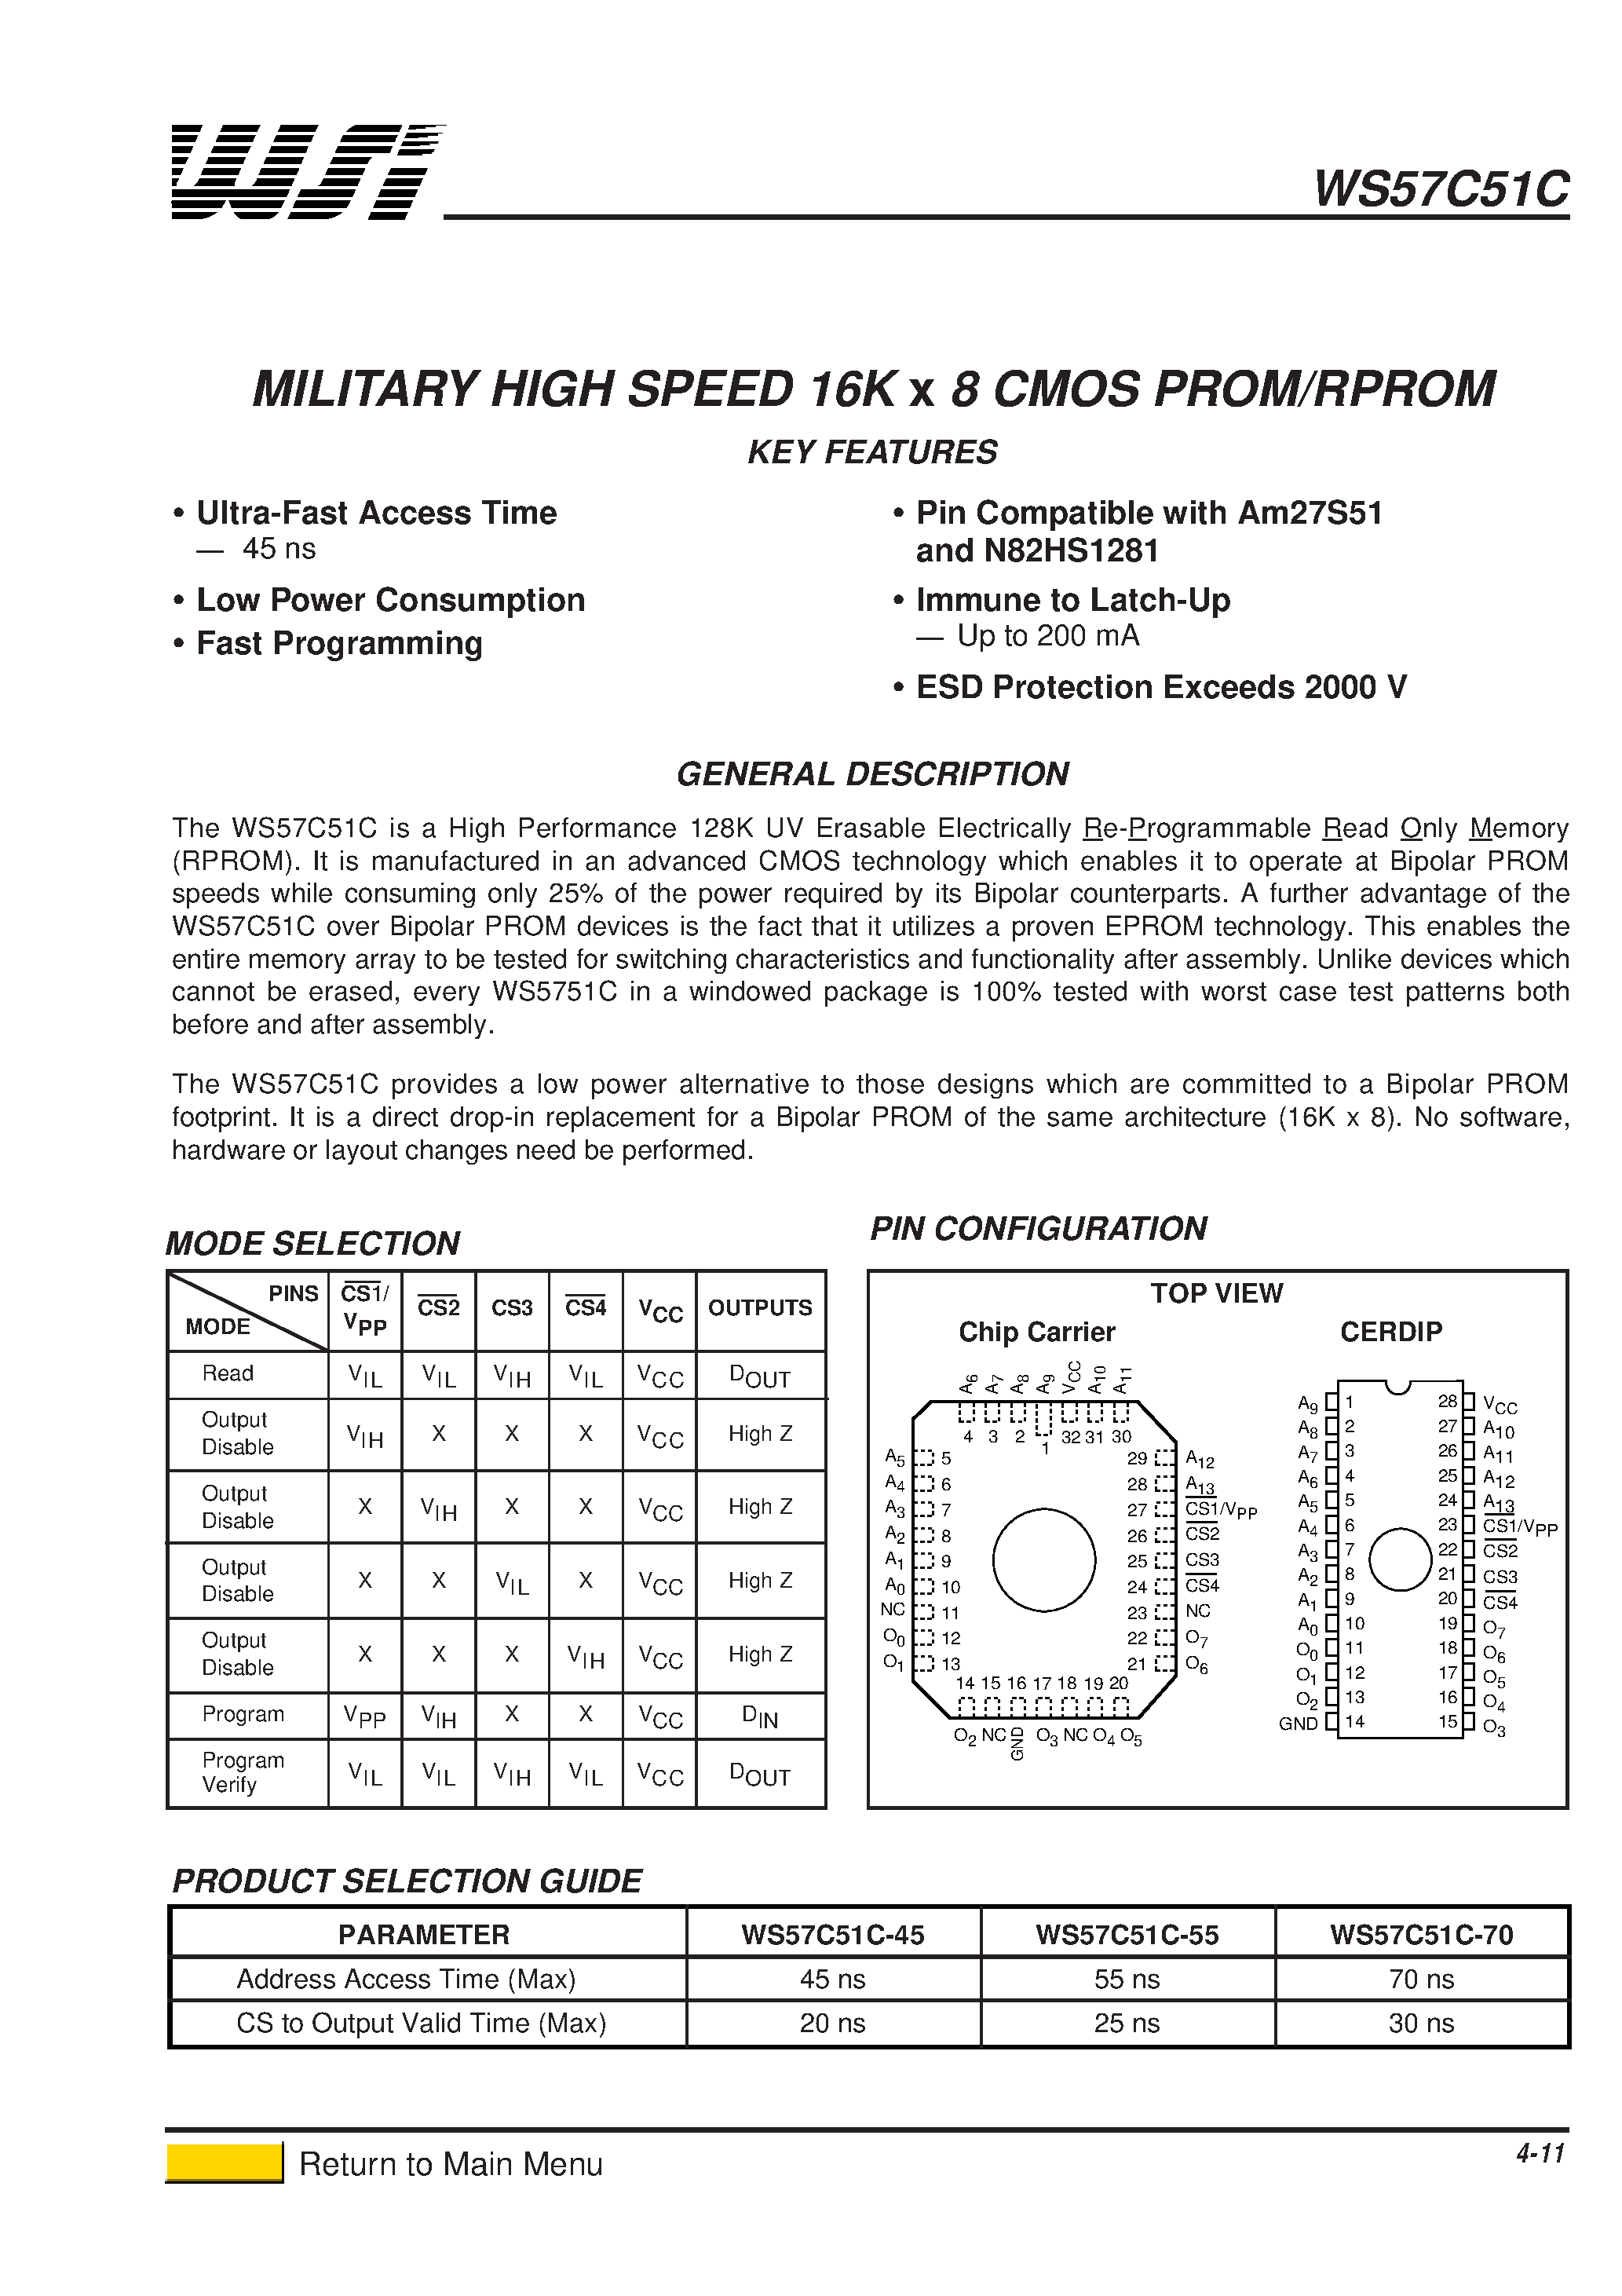 Даташит WS57C51C-45 - MILITARY HIGH SPEED 16K x 8 CMOS PROM/RPROM страница 1